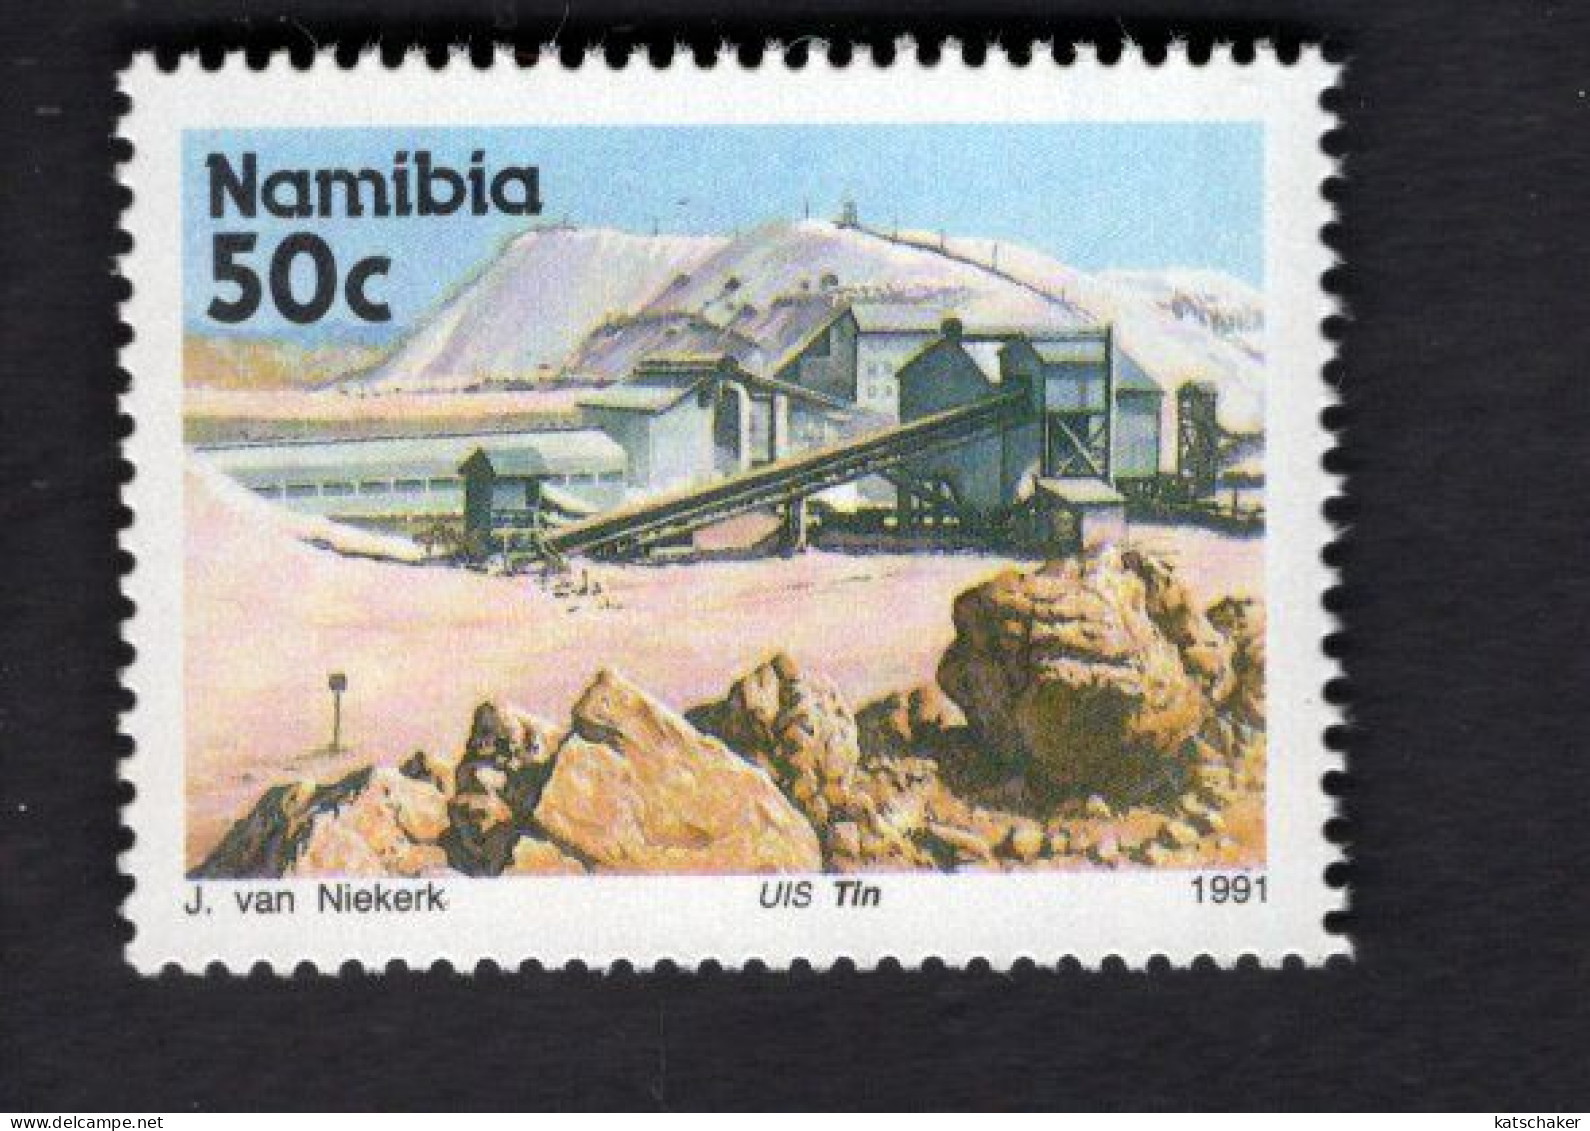 2025400223 1991 SCOTT 685 (XX) POSTFRIS MINT NEVER HINGED - MINERALS & MINES - UIS MINE - Namibië (1990- ...)